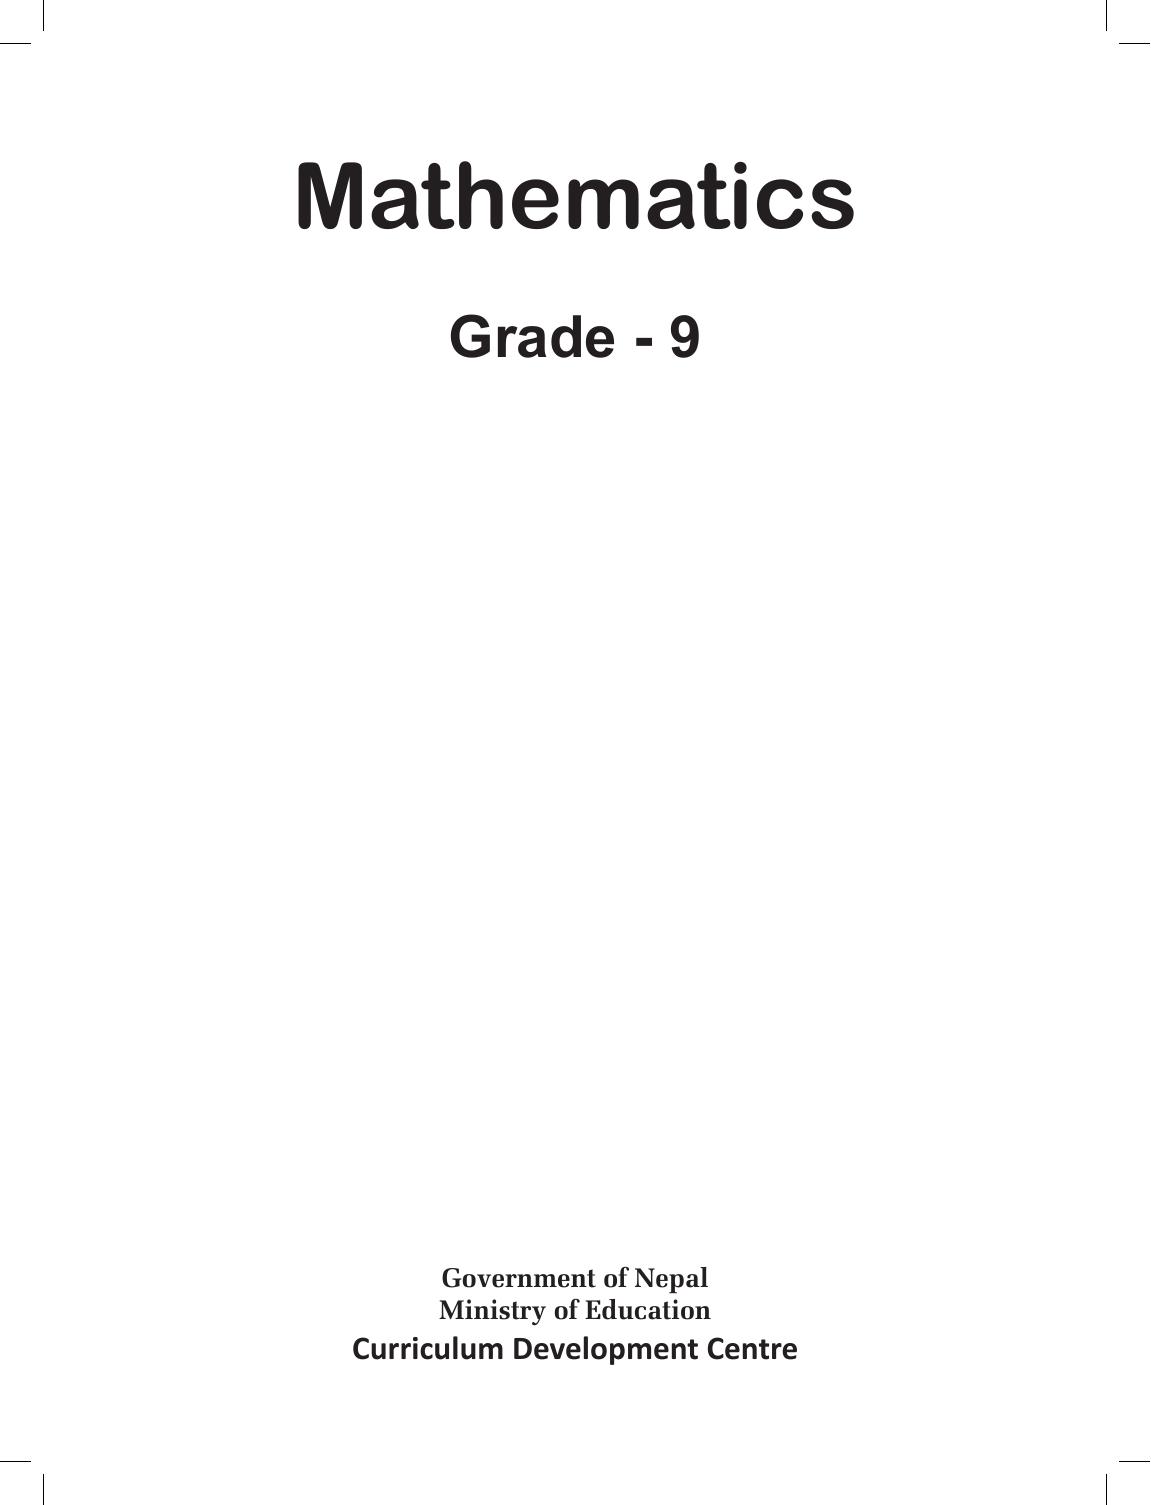 CDC 2019 - Math Grade 9